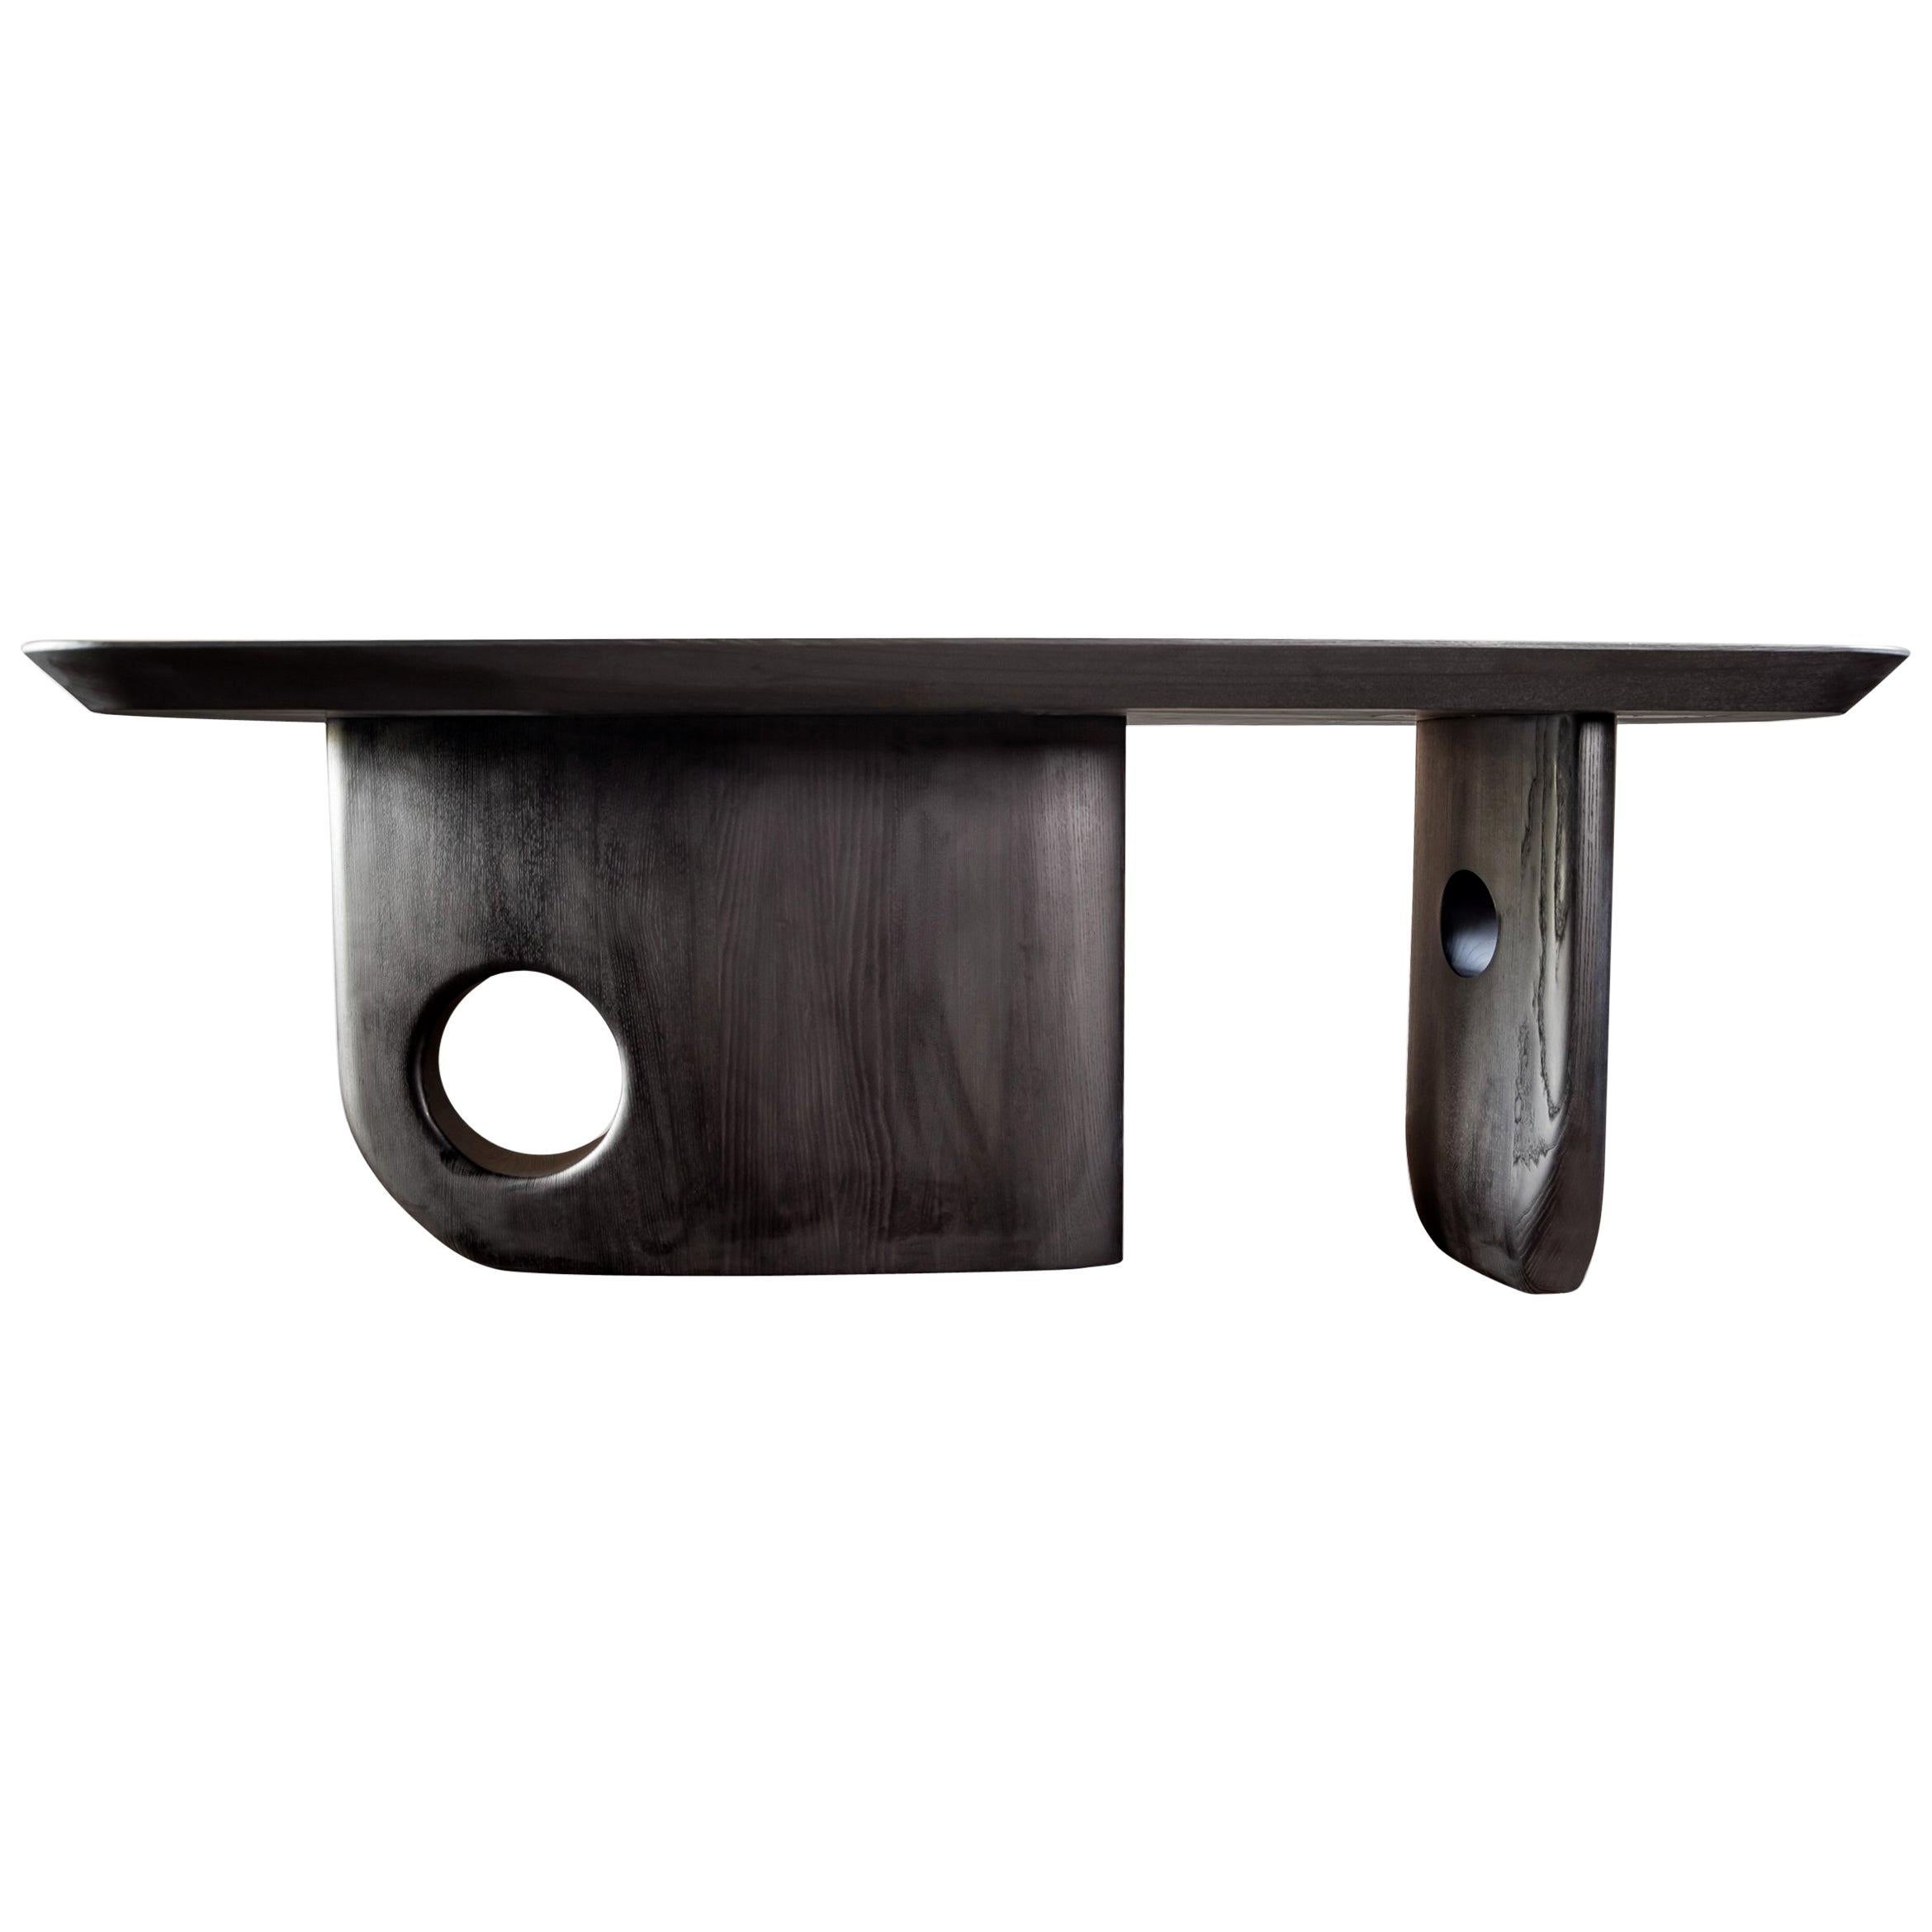 Organic bespoke - Menhir Sculptural Table/Desk Designed by Toad Gallery London